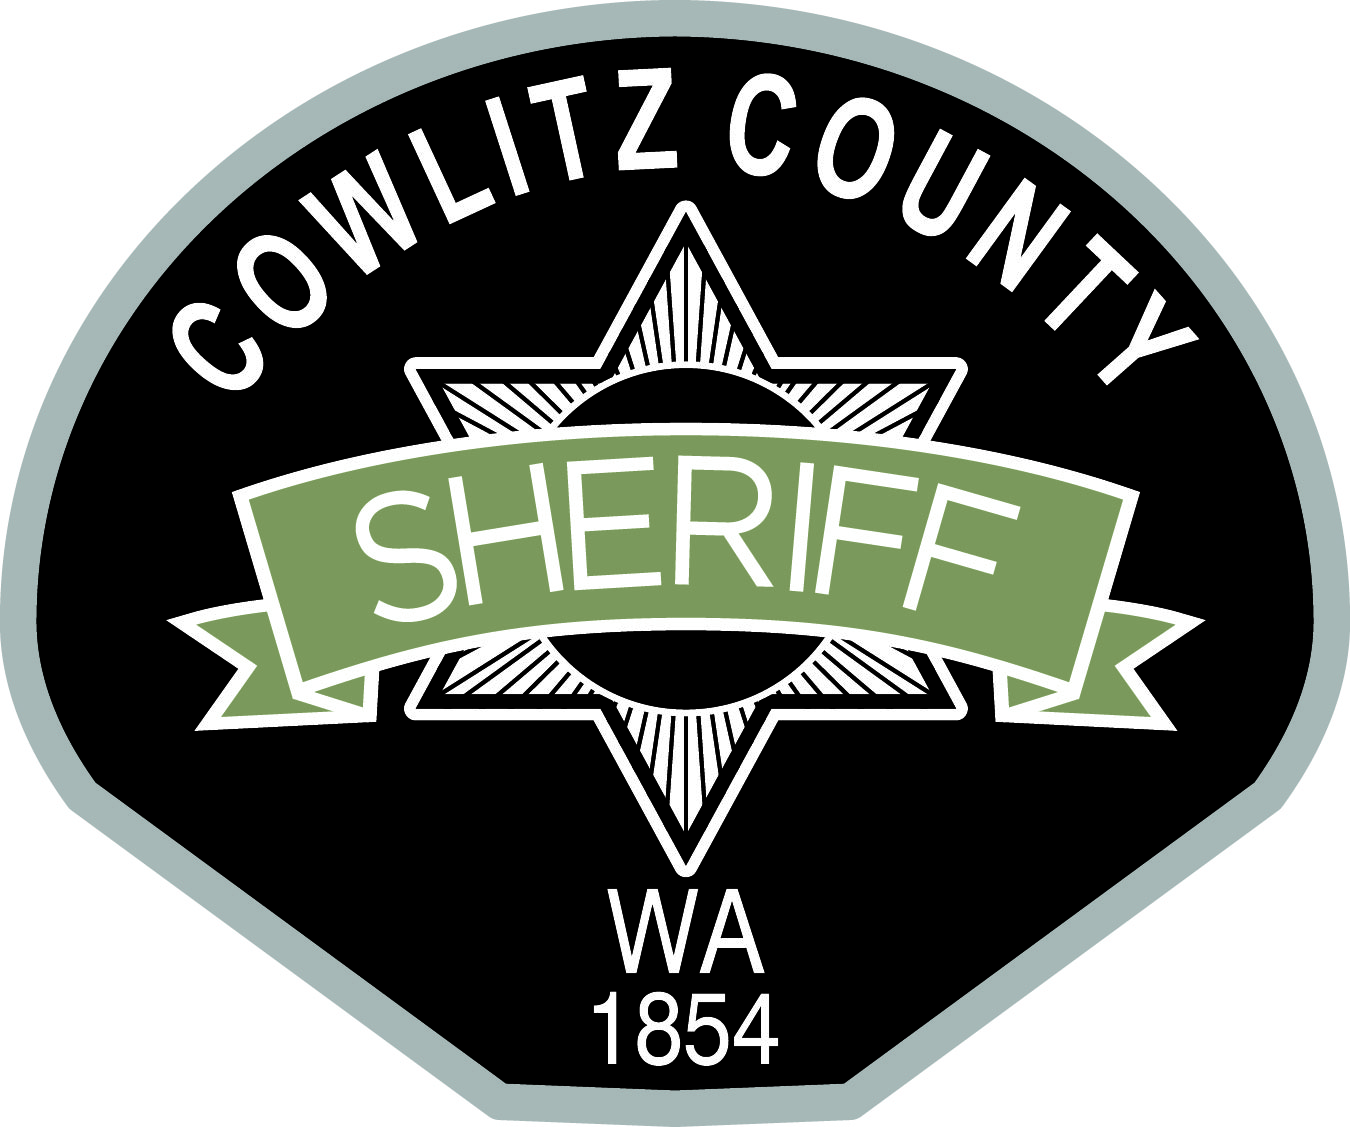 Cowlitz Co Sheriff #39 s Office news via FlashAlert Net